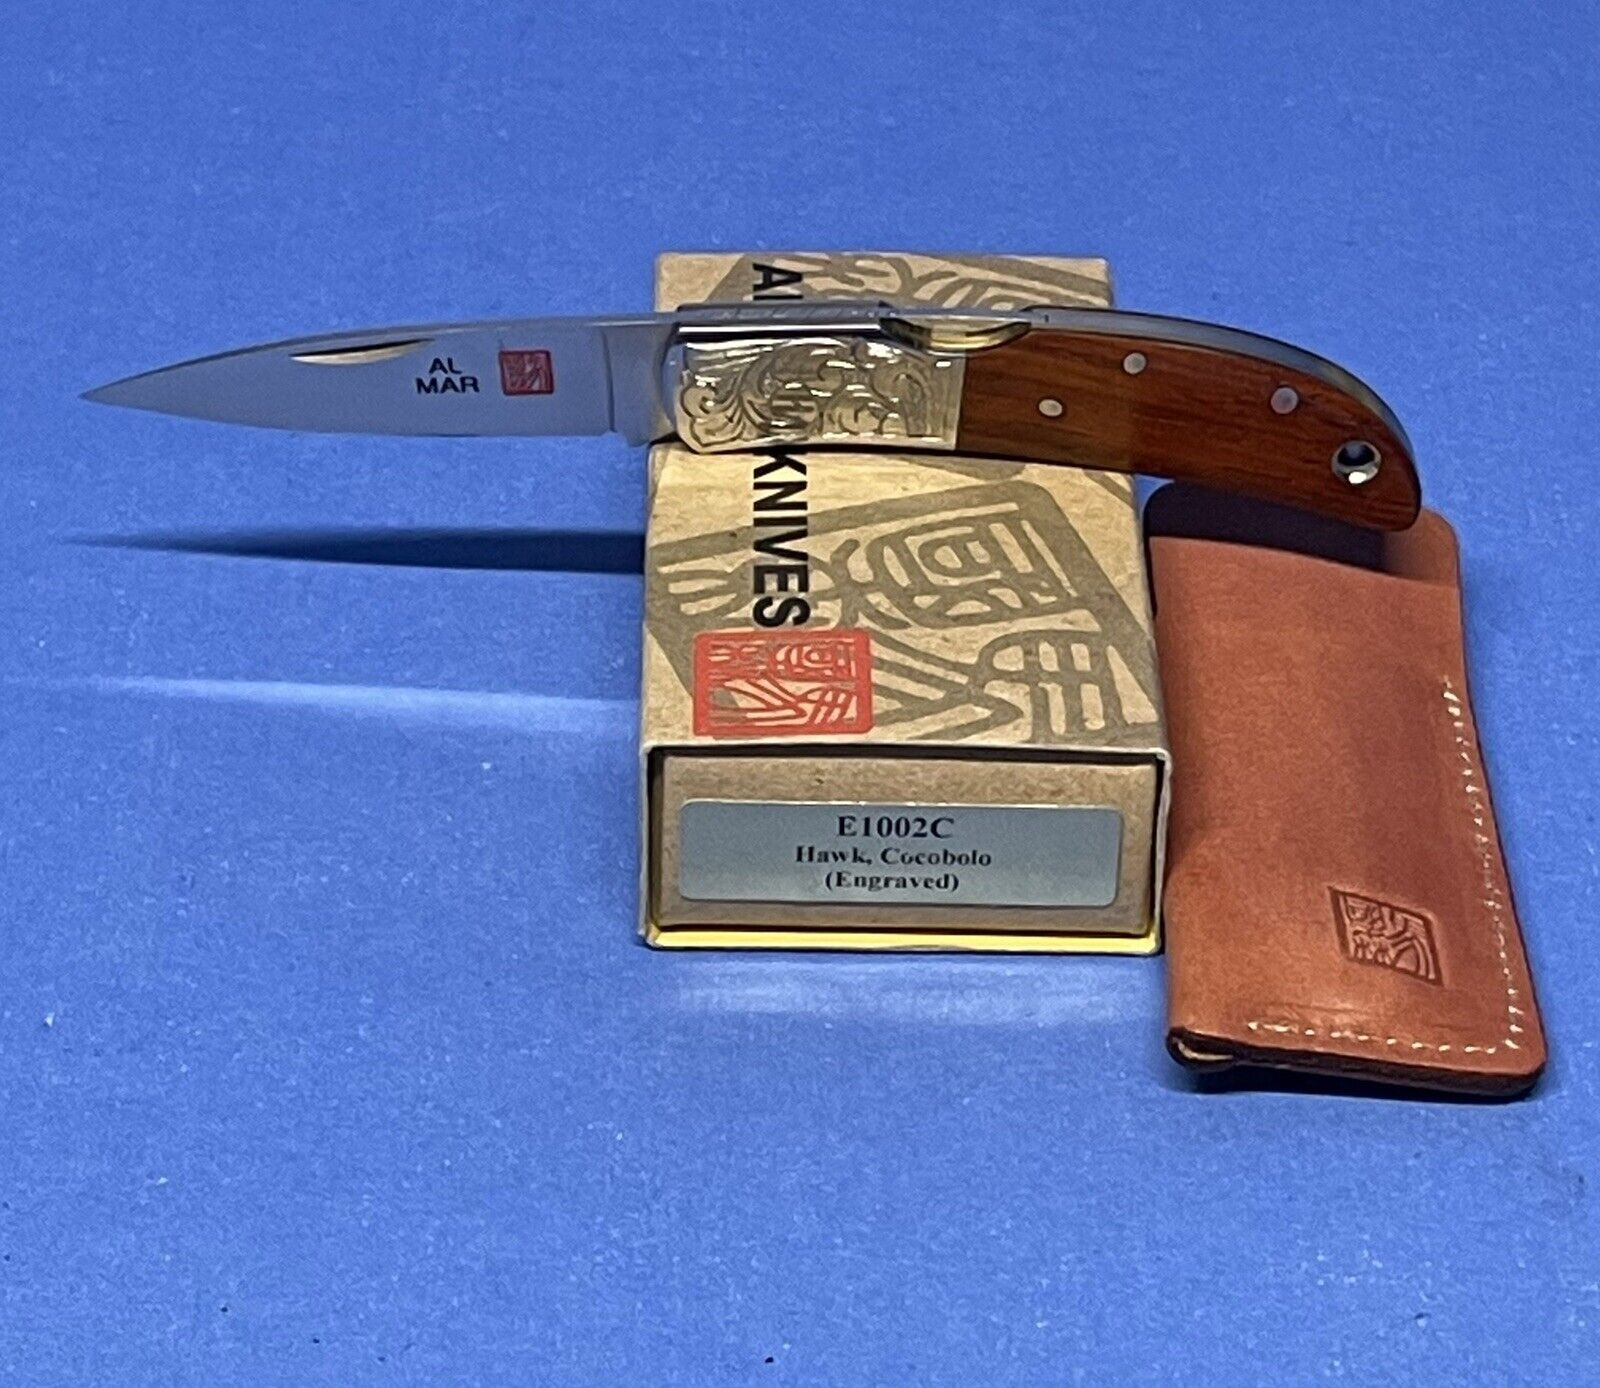 Al Mar collectible folding pocket knife Hawk Cocobolo E1002C Valade